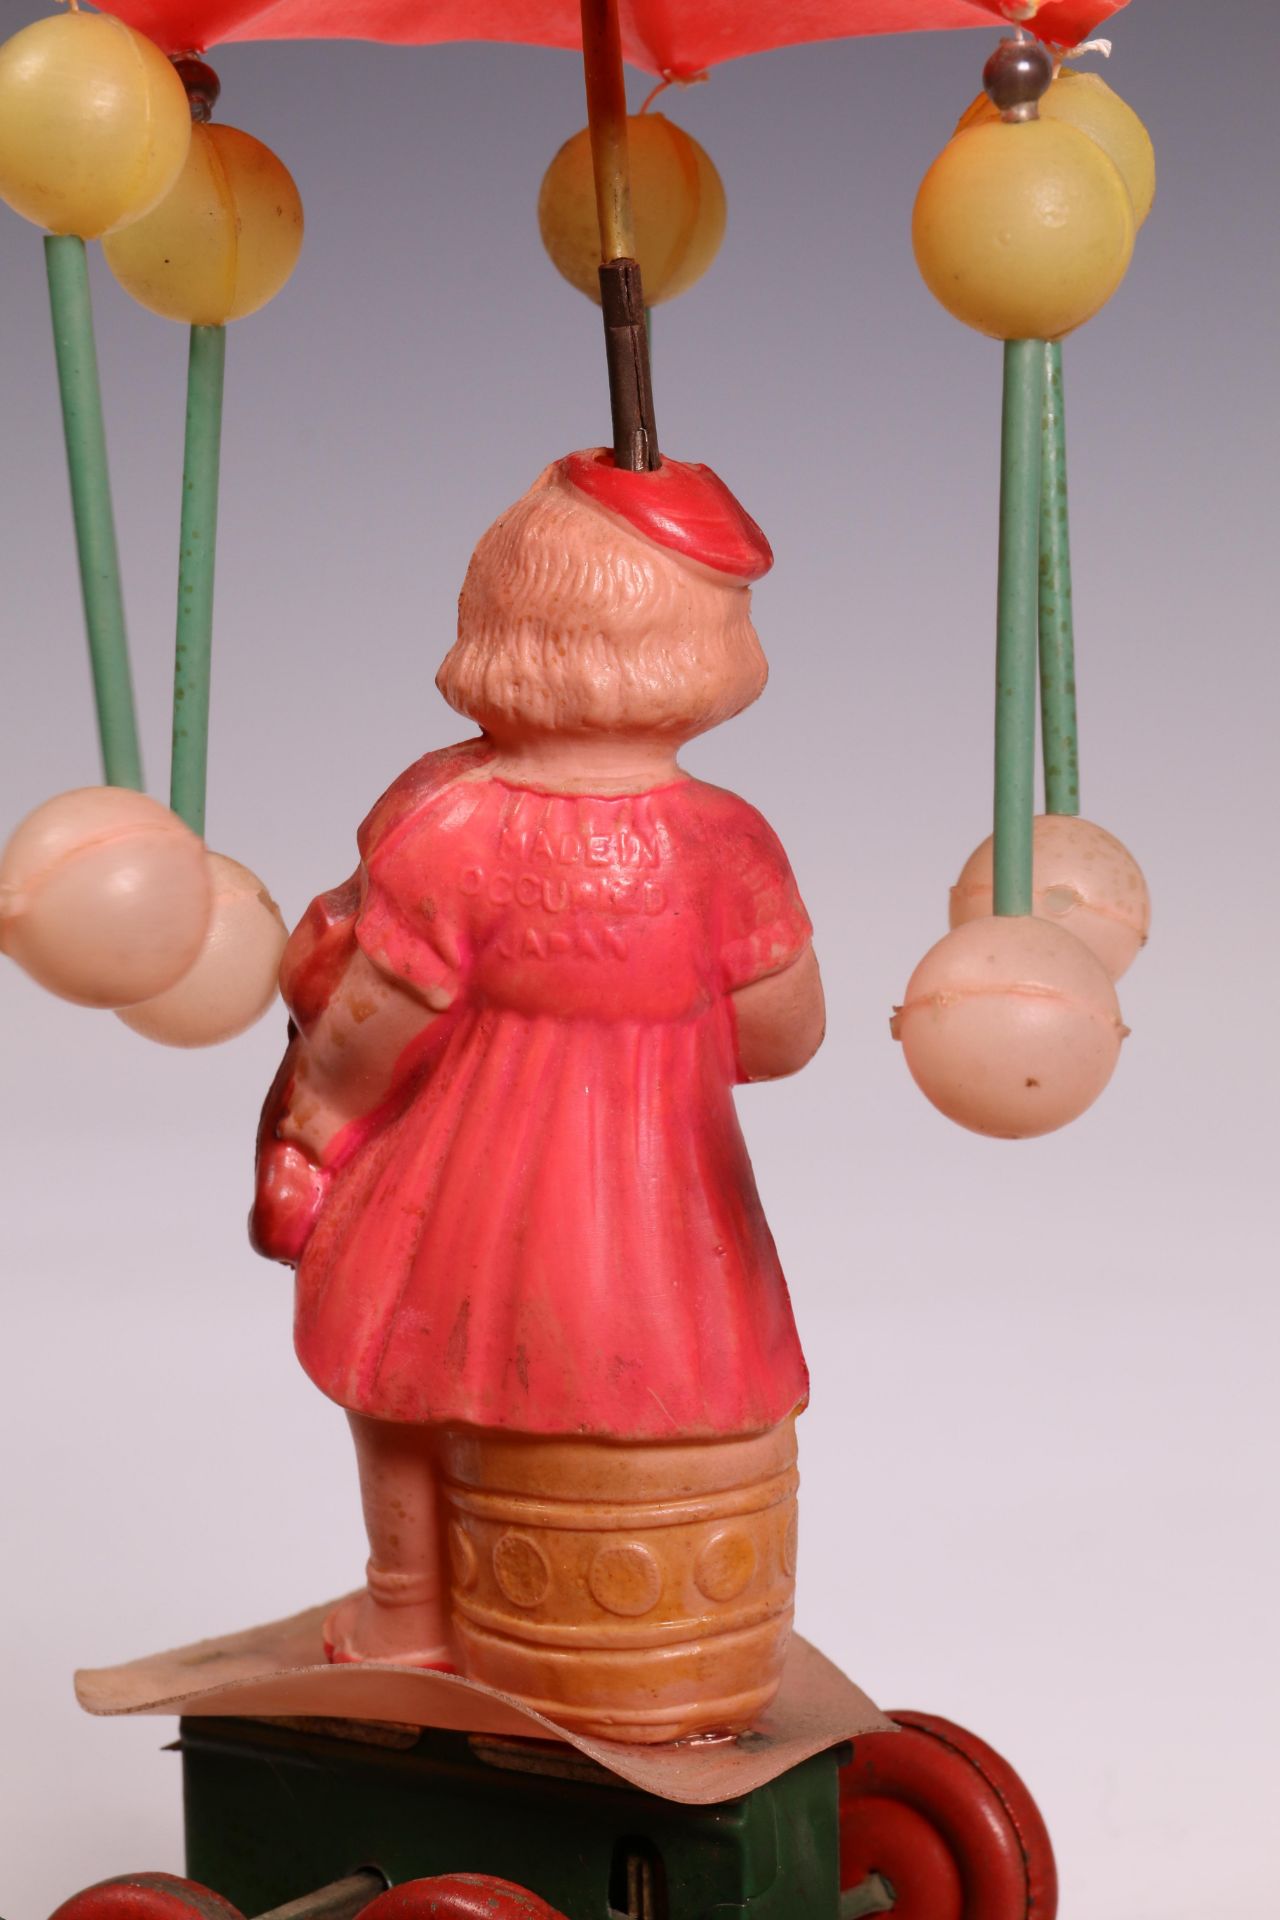 Japan, vier stuks celluloid speelgoed, ca. 1940-1950. - Image 3 of 19